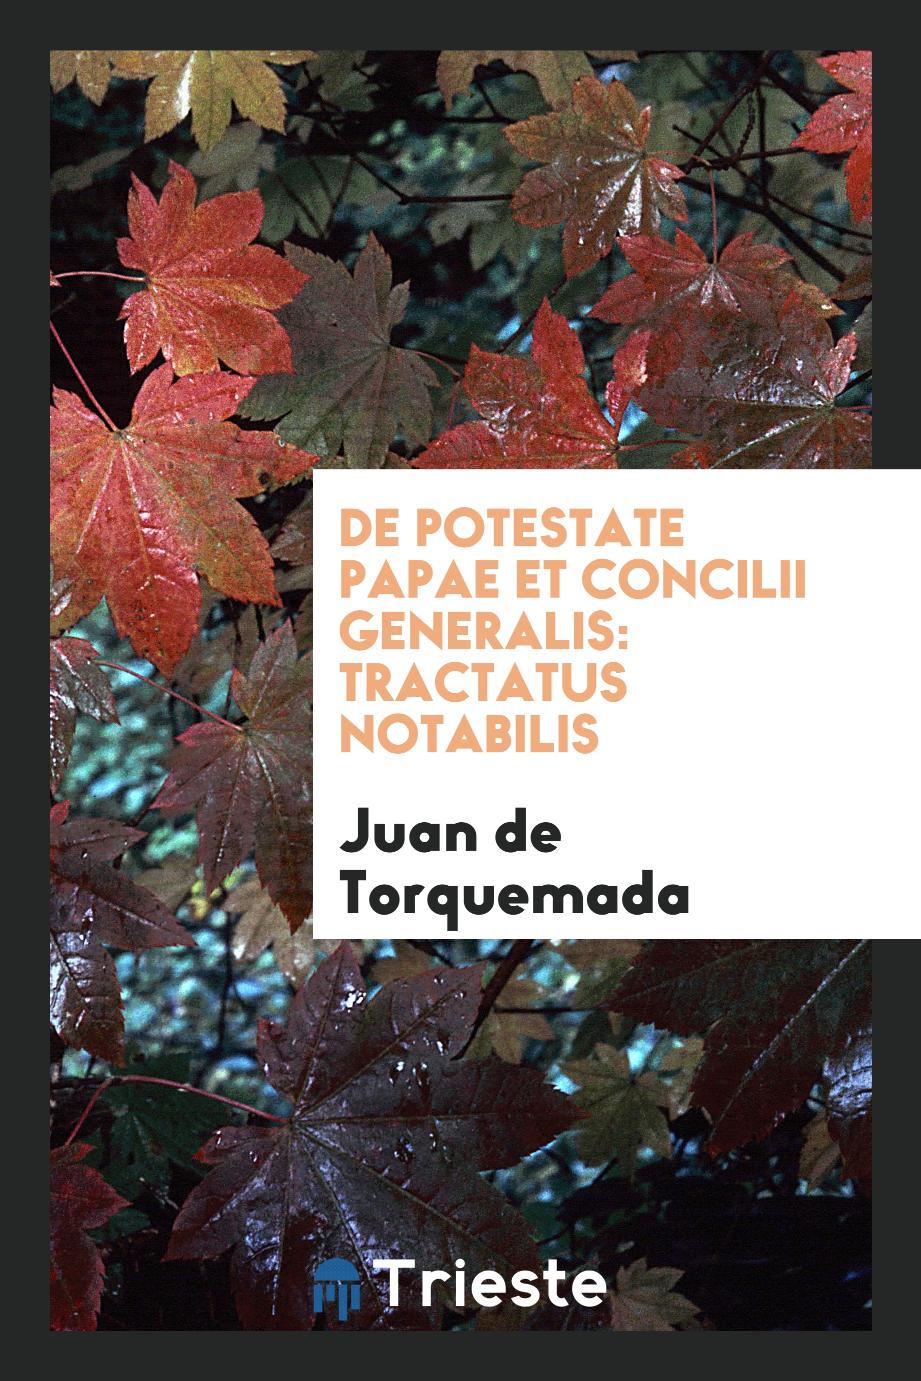 Juan de Torquemada - De potestate papae et concilii generalis: tractatus notabilis